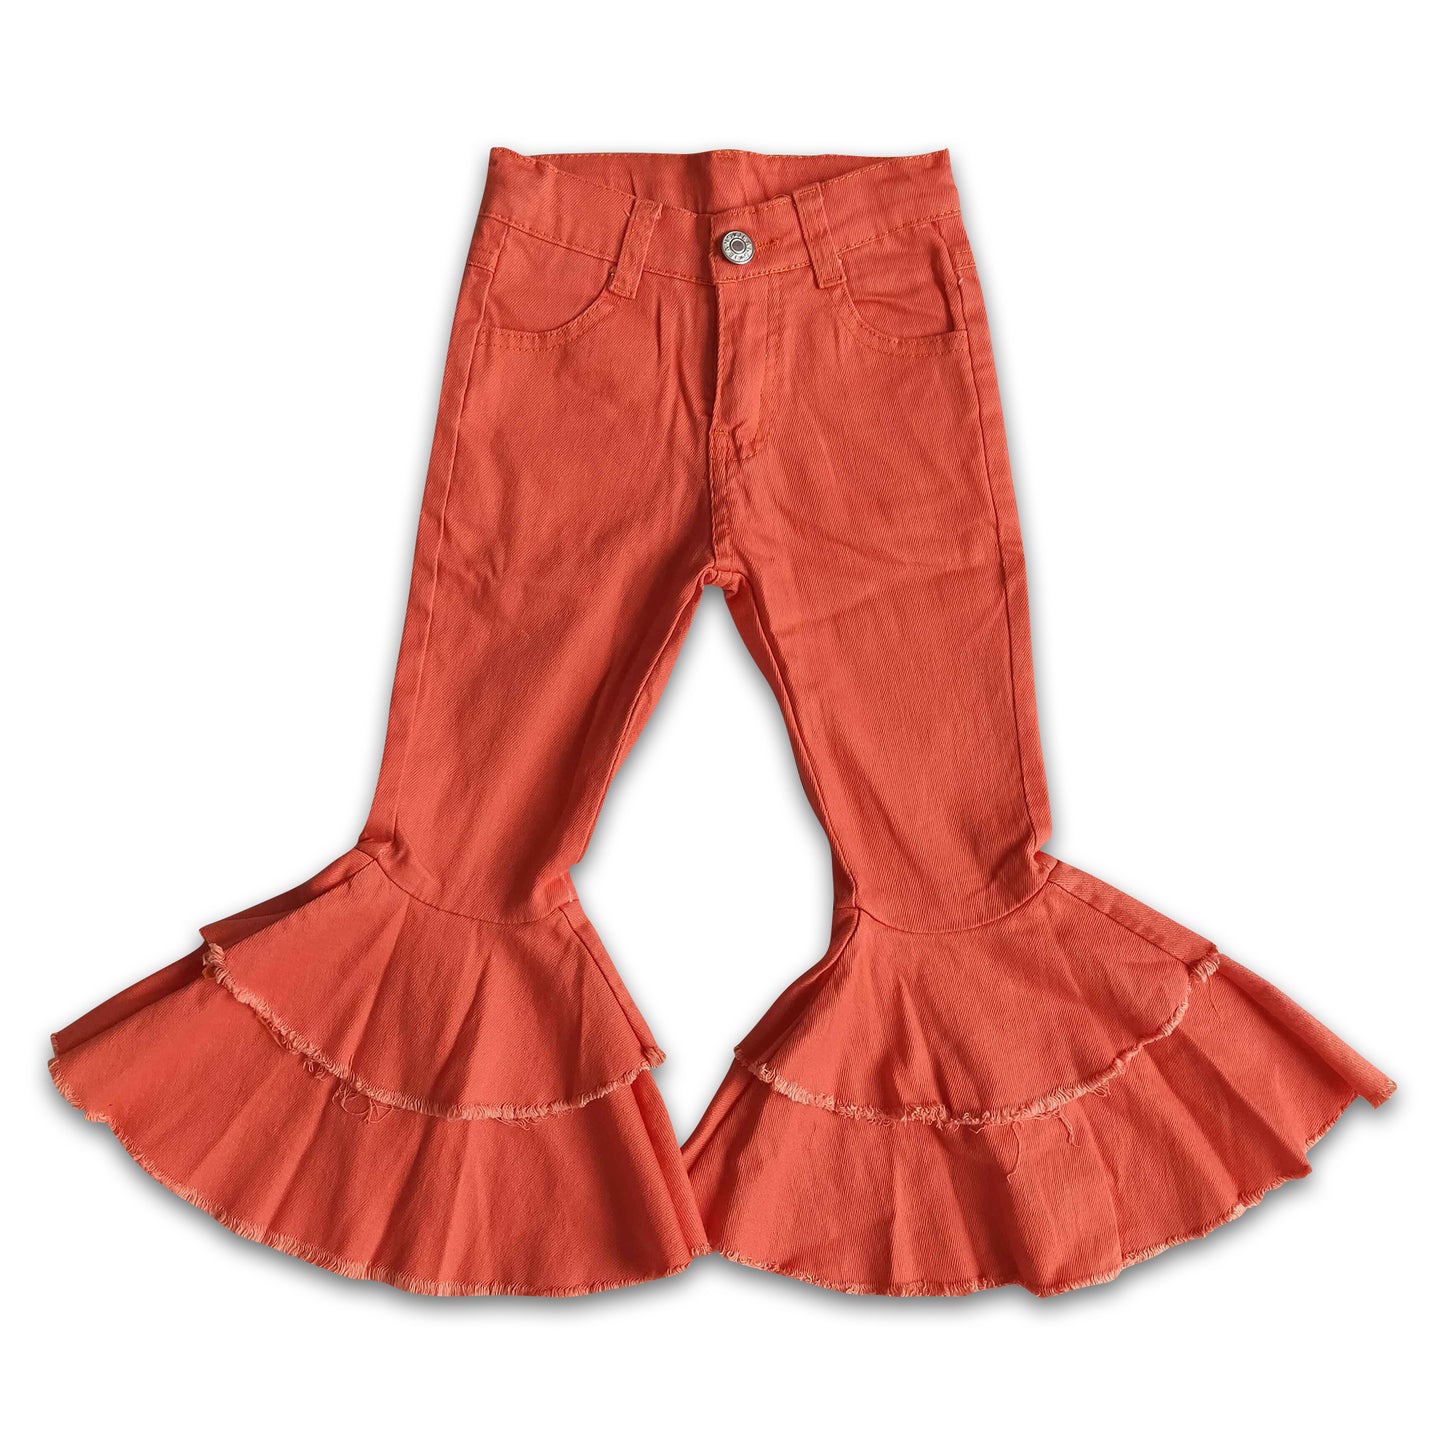 Watermelon red color adjustable waistband ruffle bell bottom denim pants